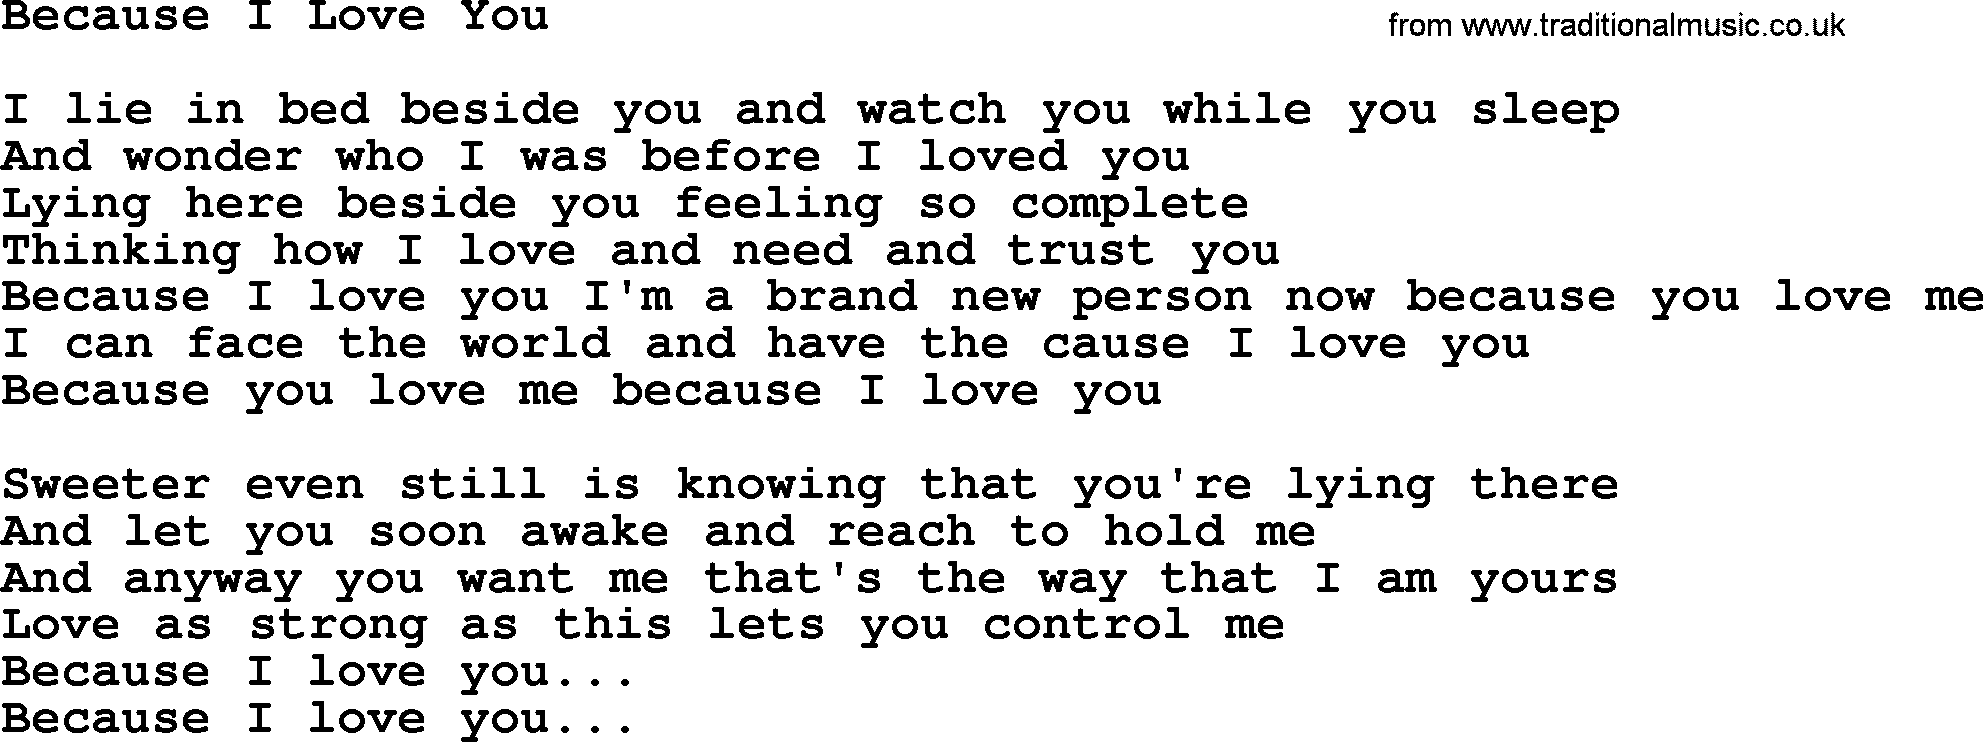 Dolly Parton song Because I Love You.txt lyrics